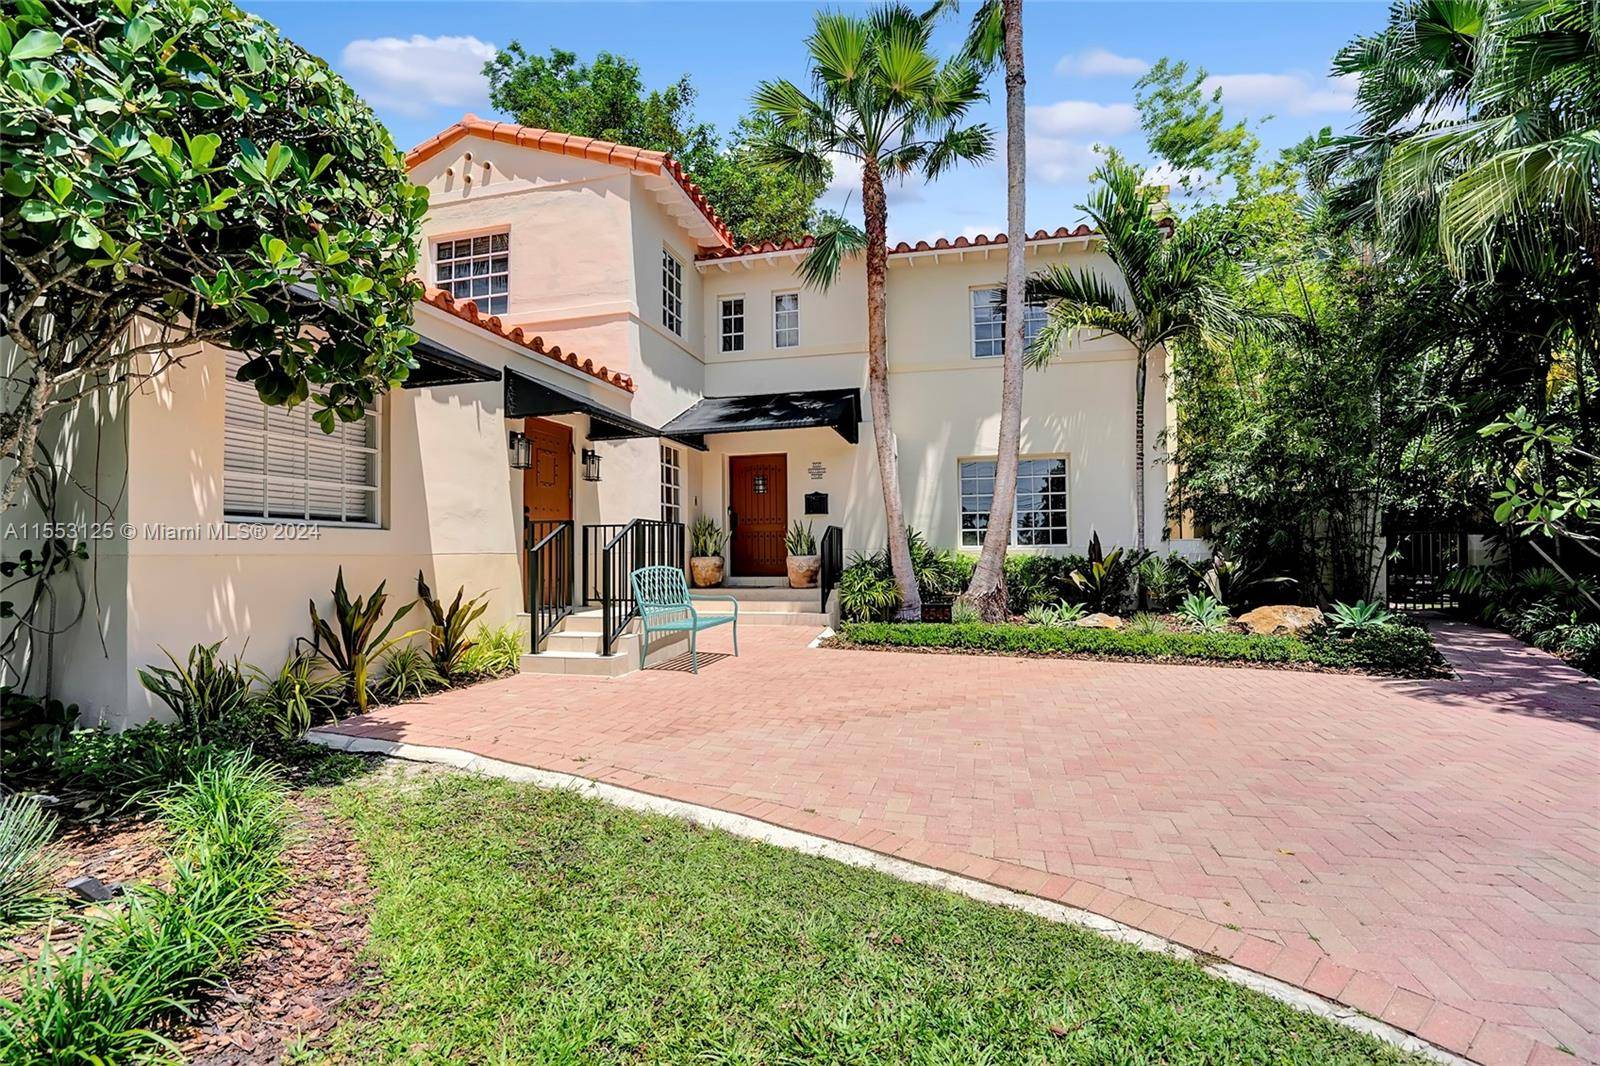 New On the Market ! Beautiful Spanish Mediterranean Home On mid Miami Beach.